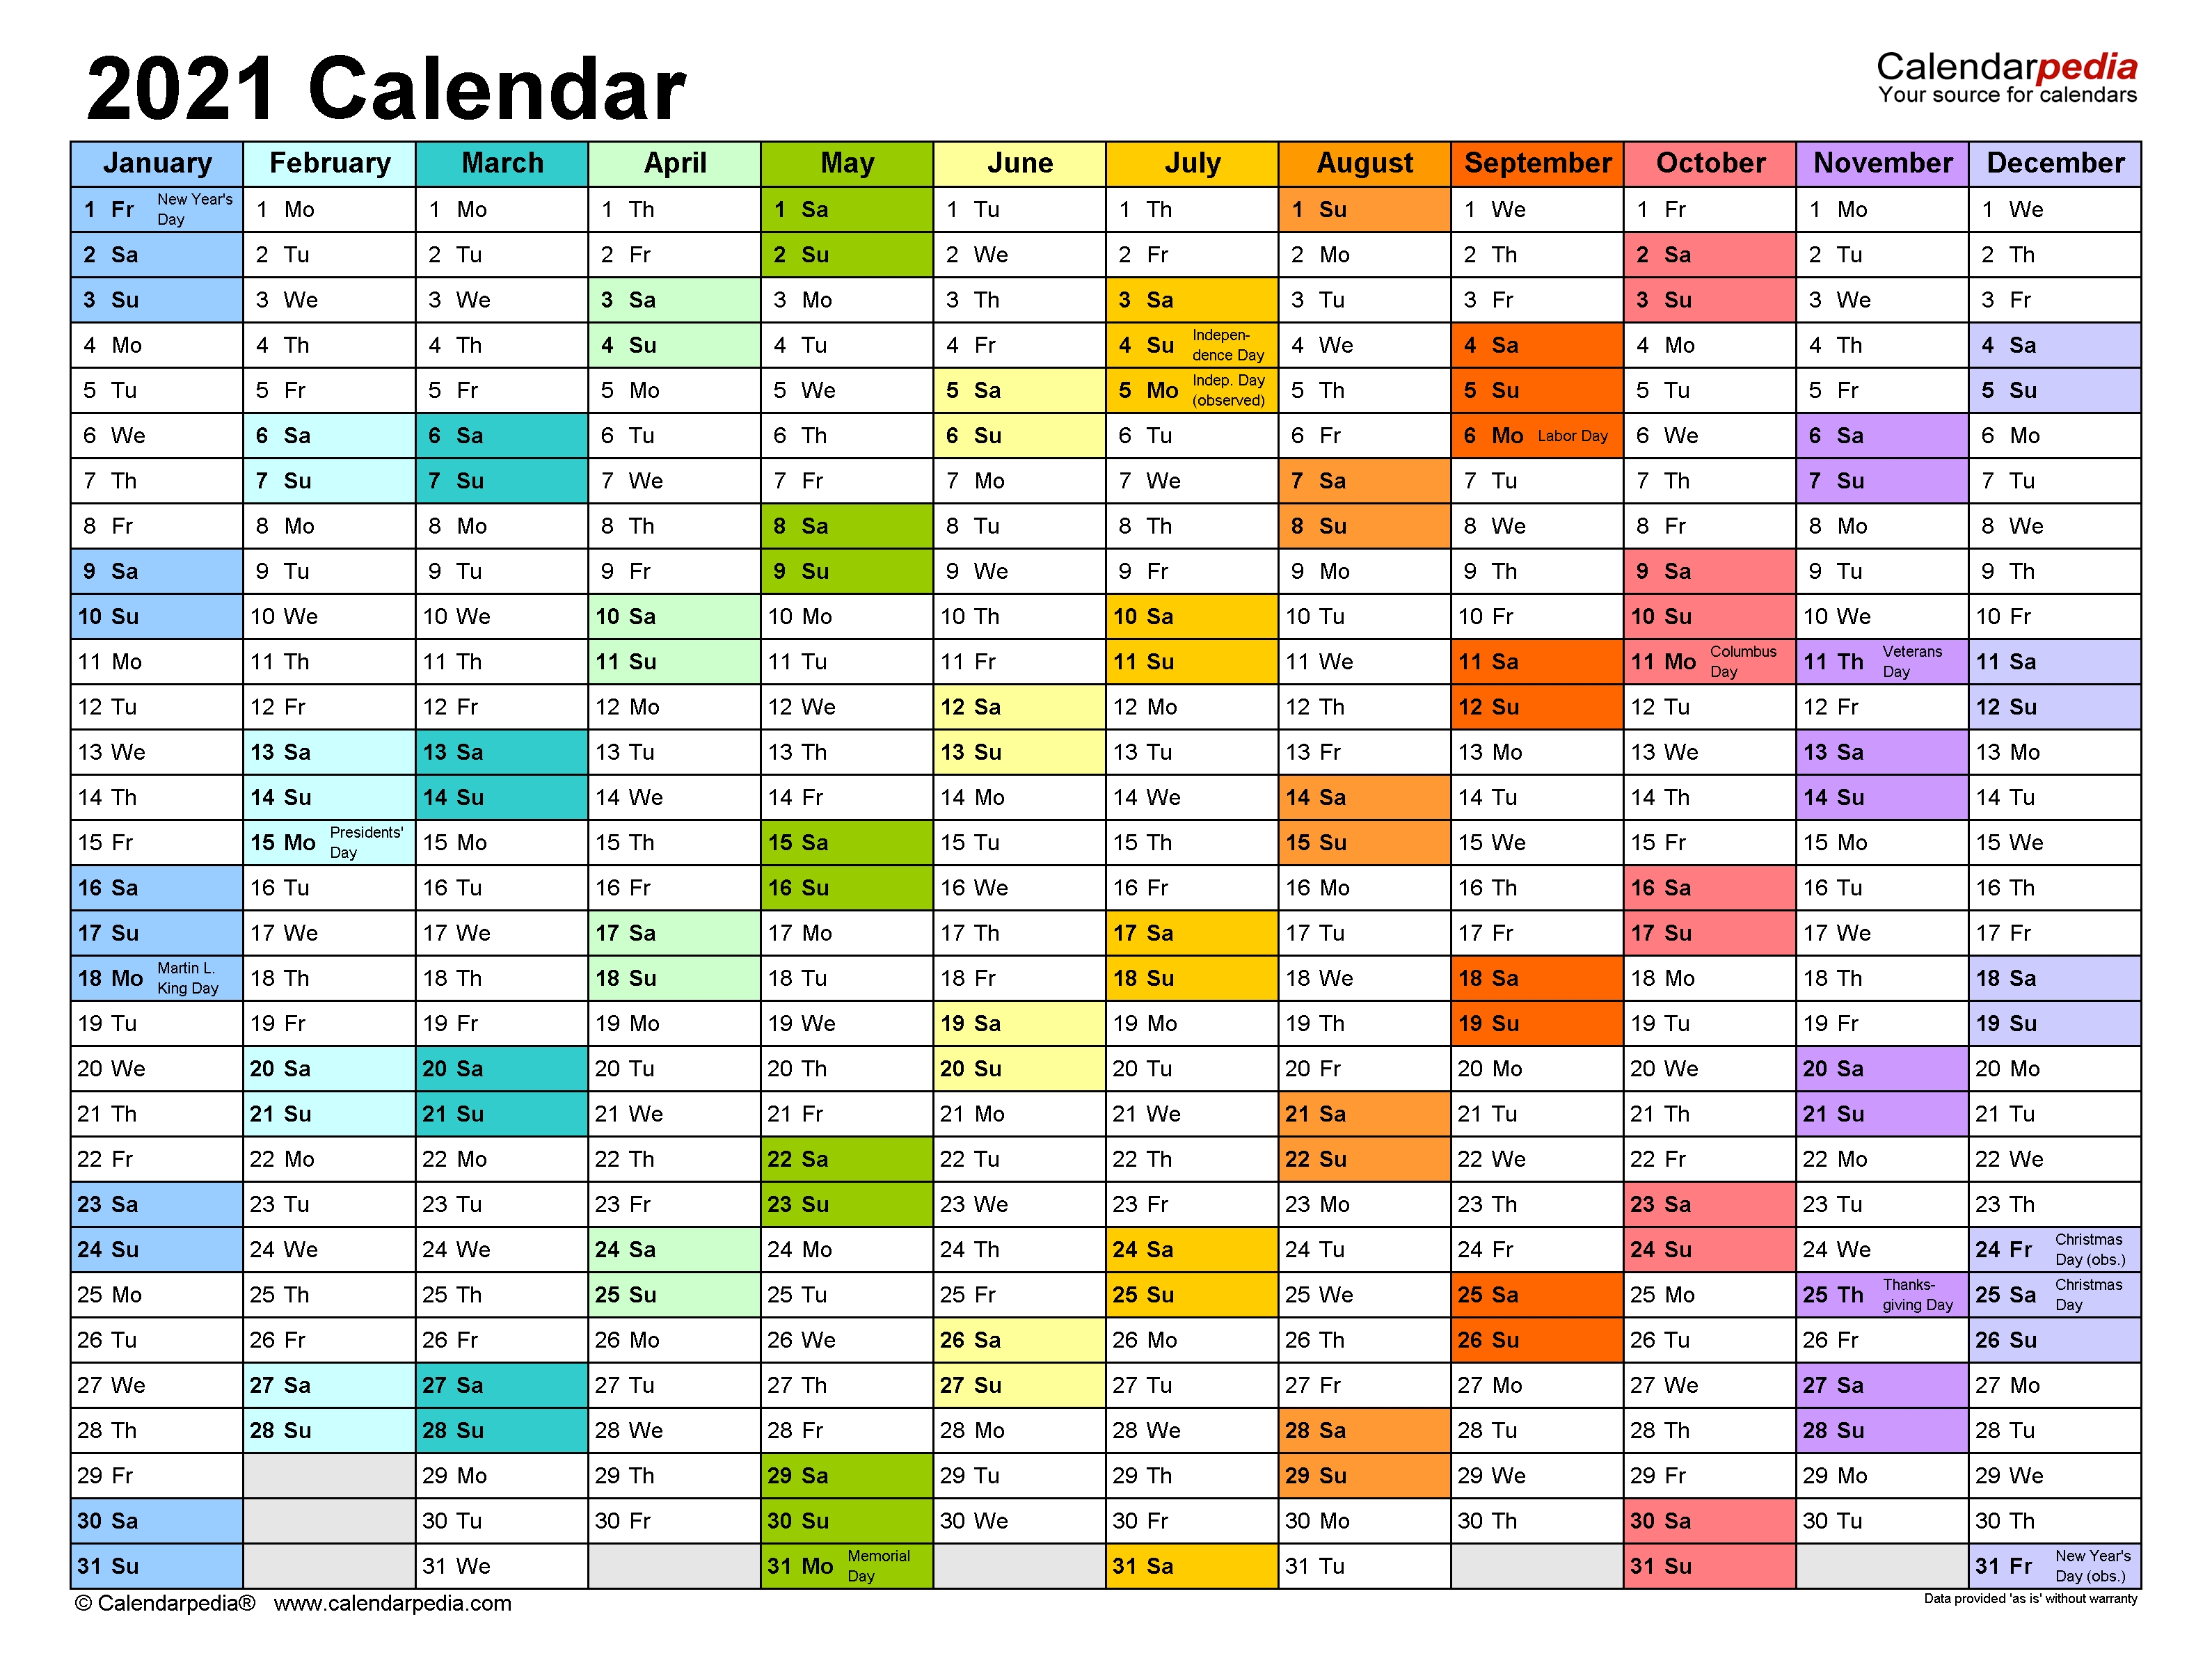 2021 Calendar - Free Printable Excel Templates - Calendarpedia Planner 2021 Excel Calendar Template